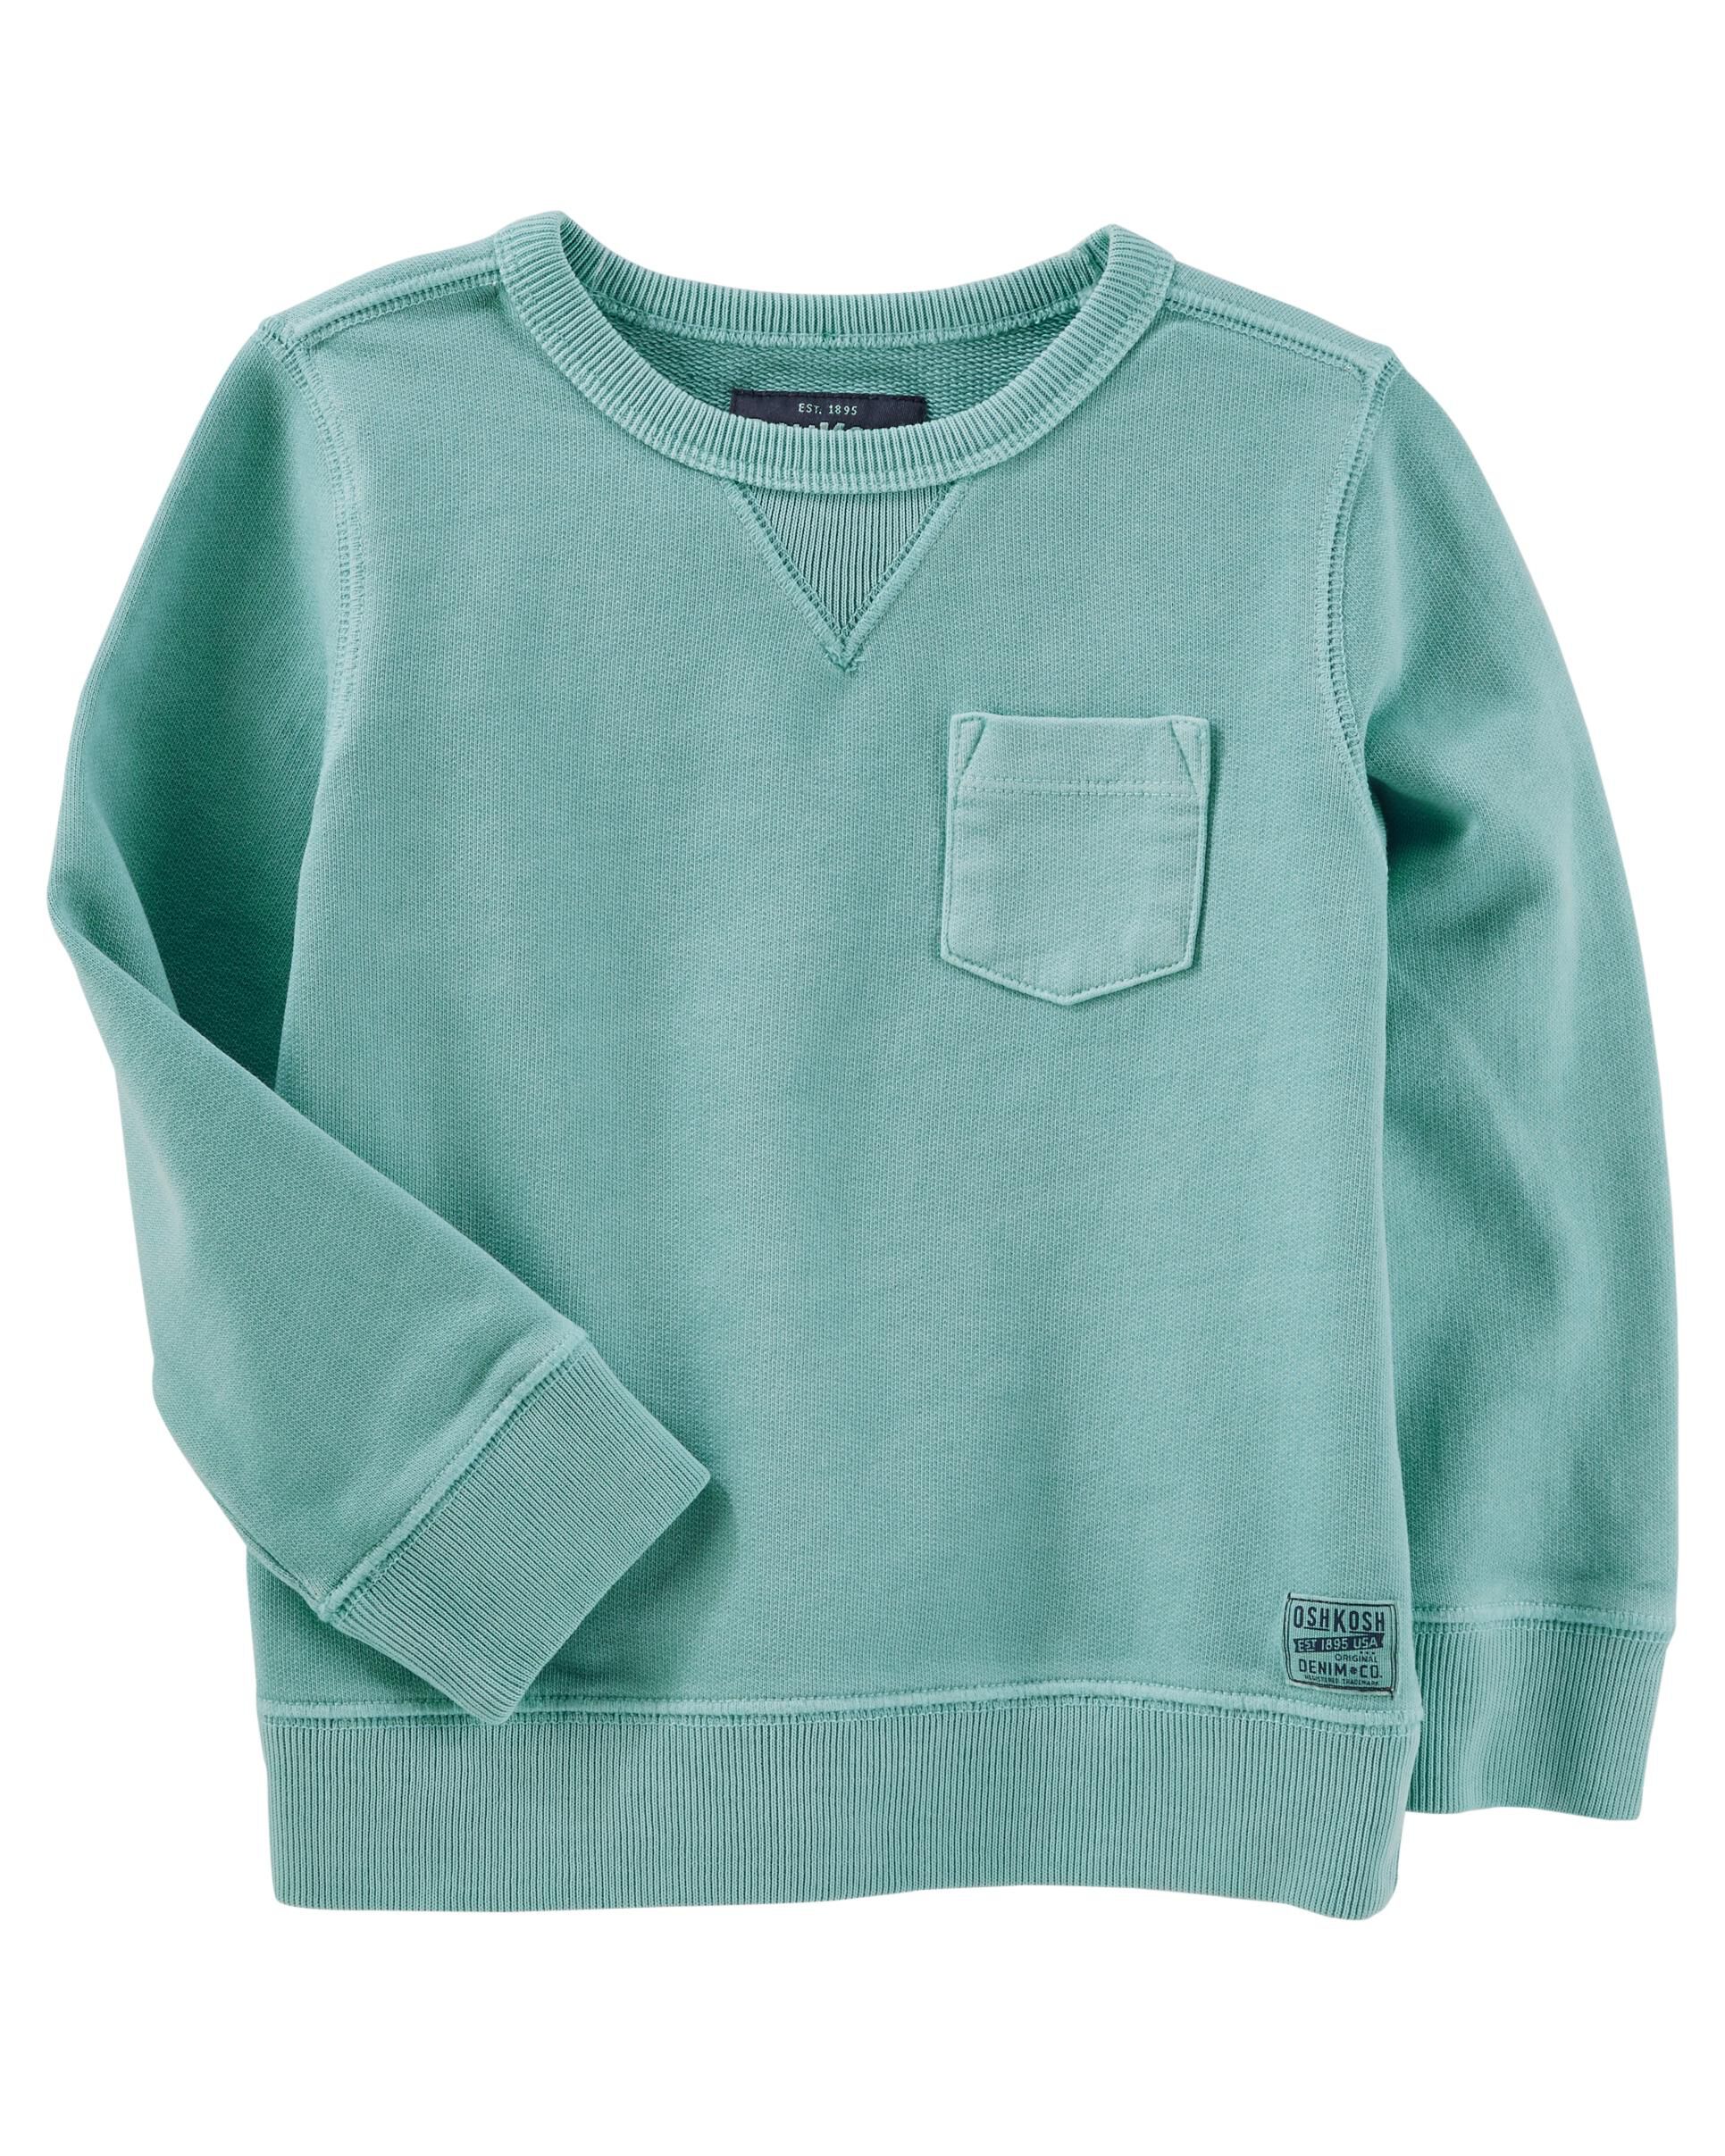 New Oshkosh Sweatshirt Boys Shirt Top Blue Garment Dye 7,10/12 